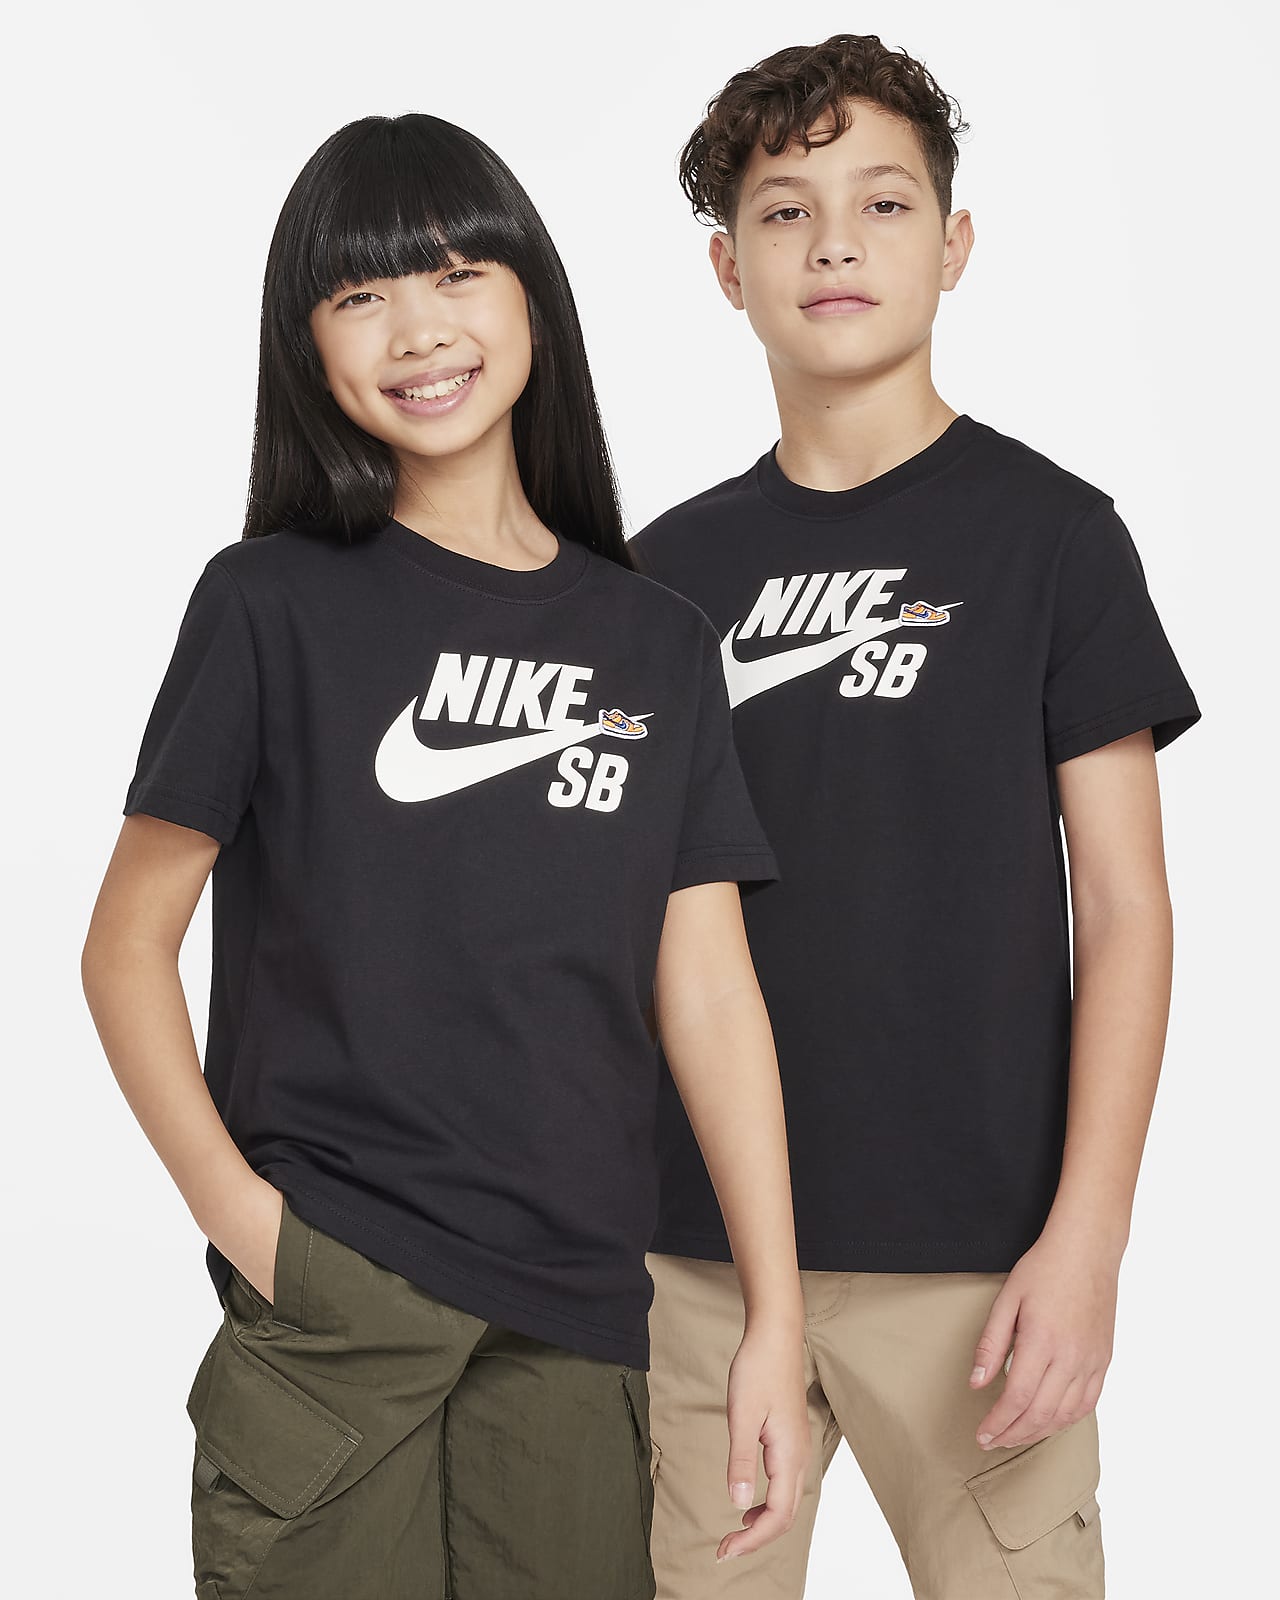 Nike SB Genç Çocuk Tişörtü